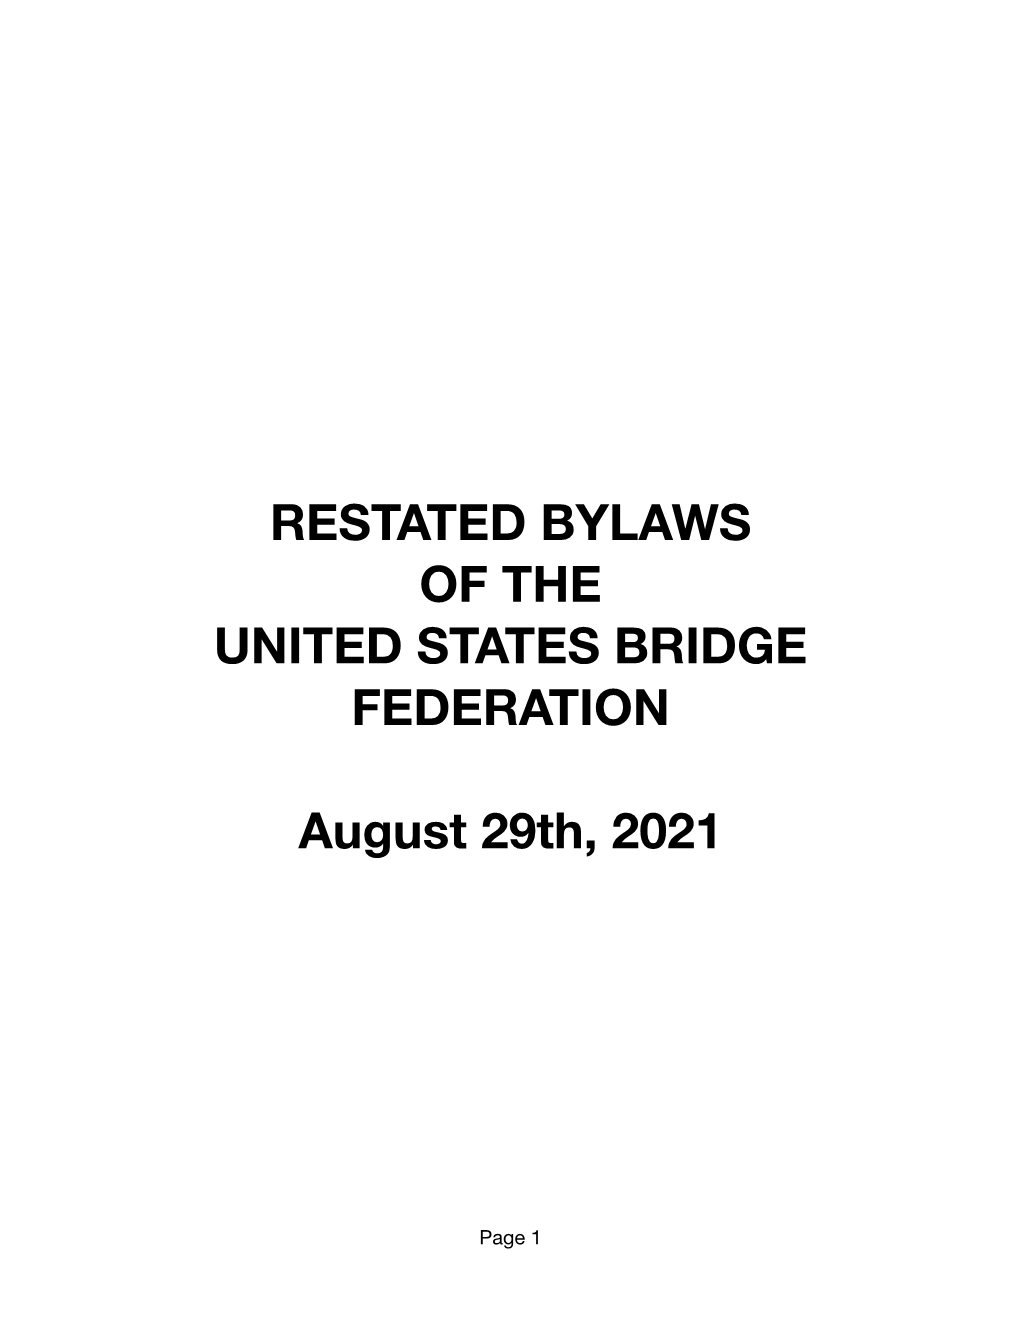 Bylaws of the United States Bridge Federation